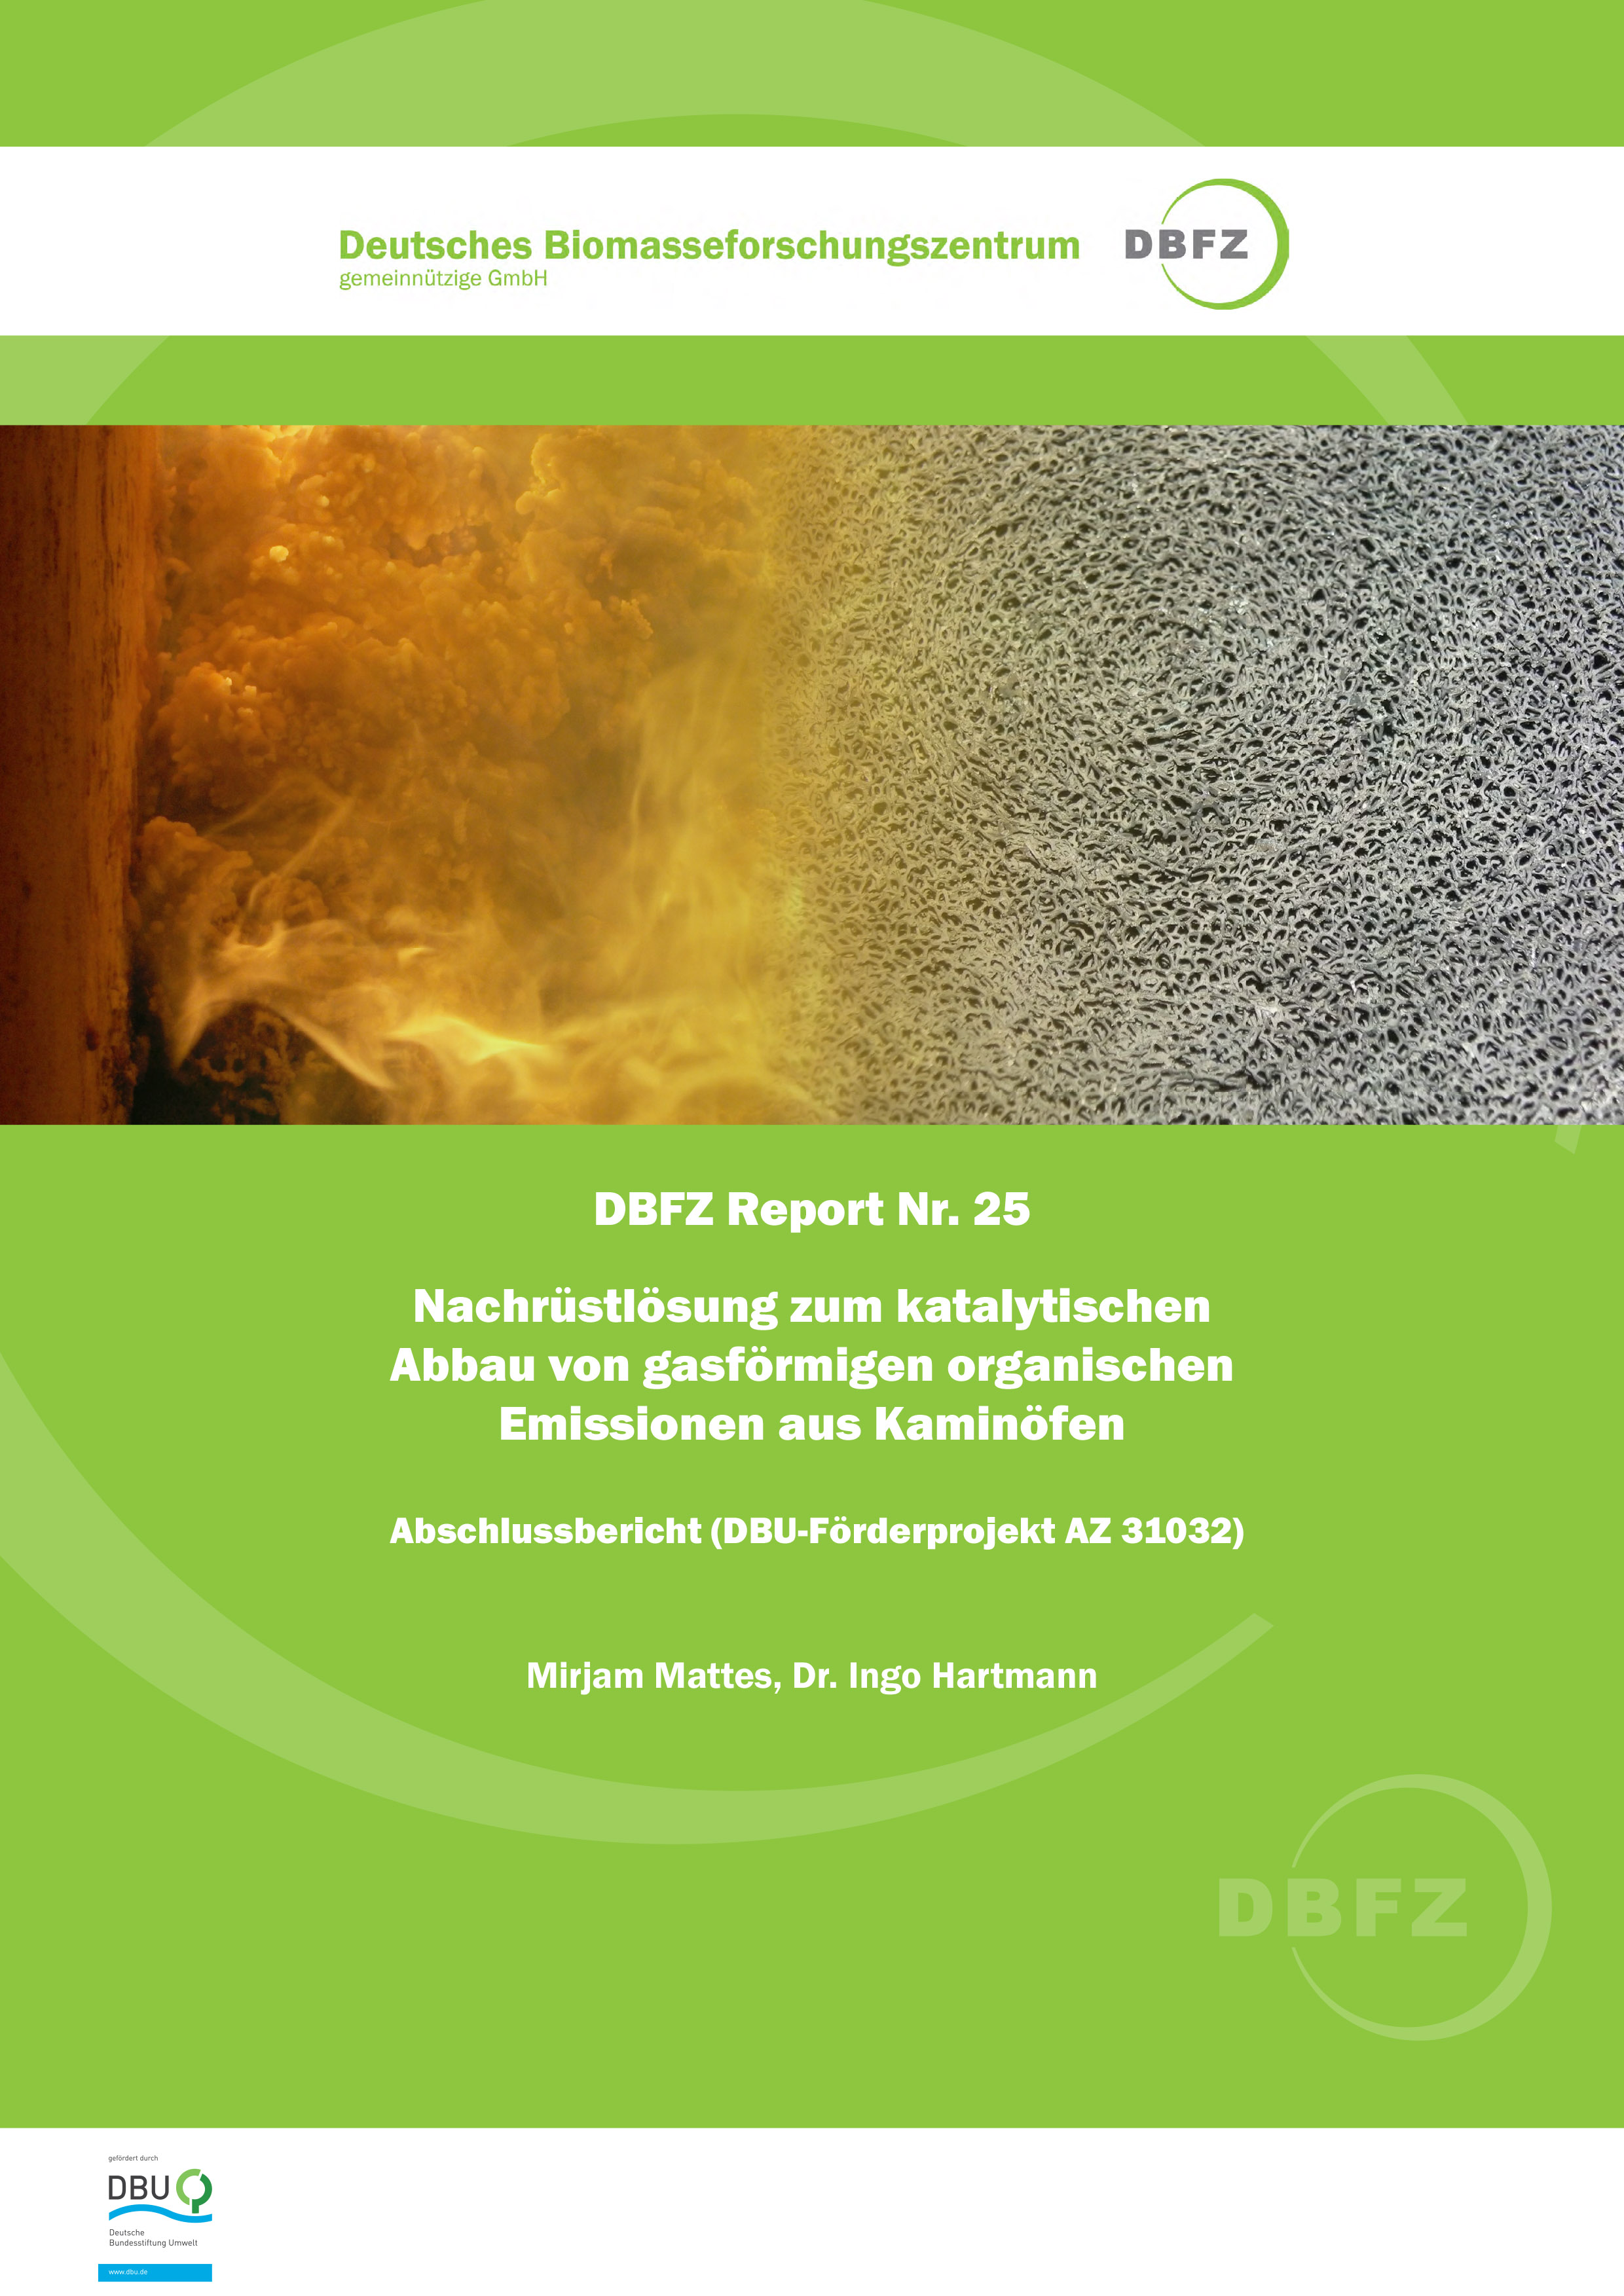 DBFZ Report No. 25